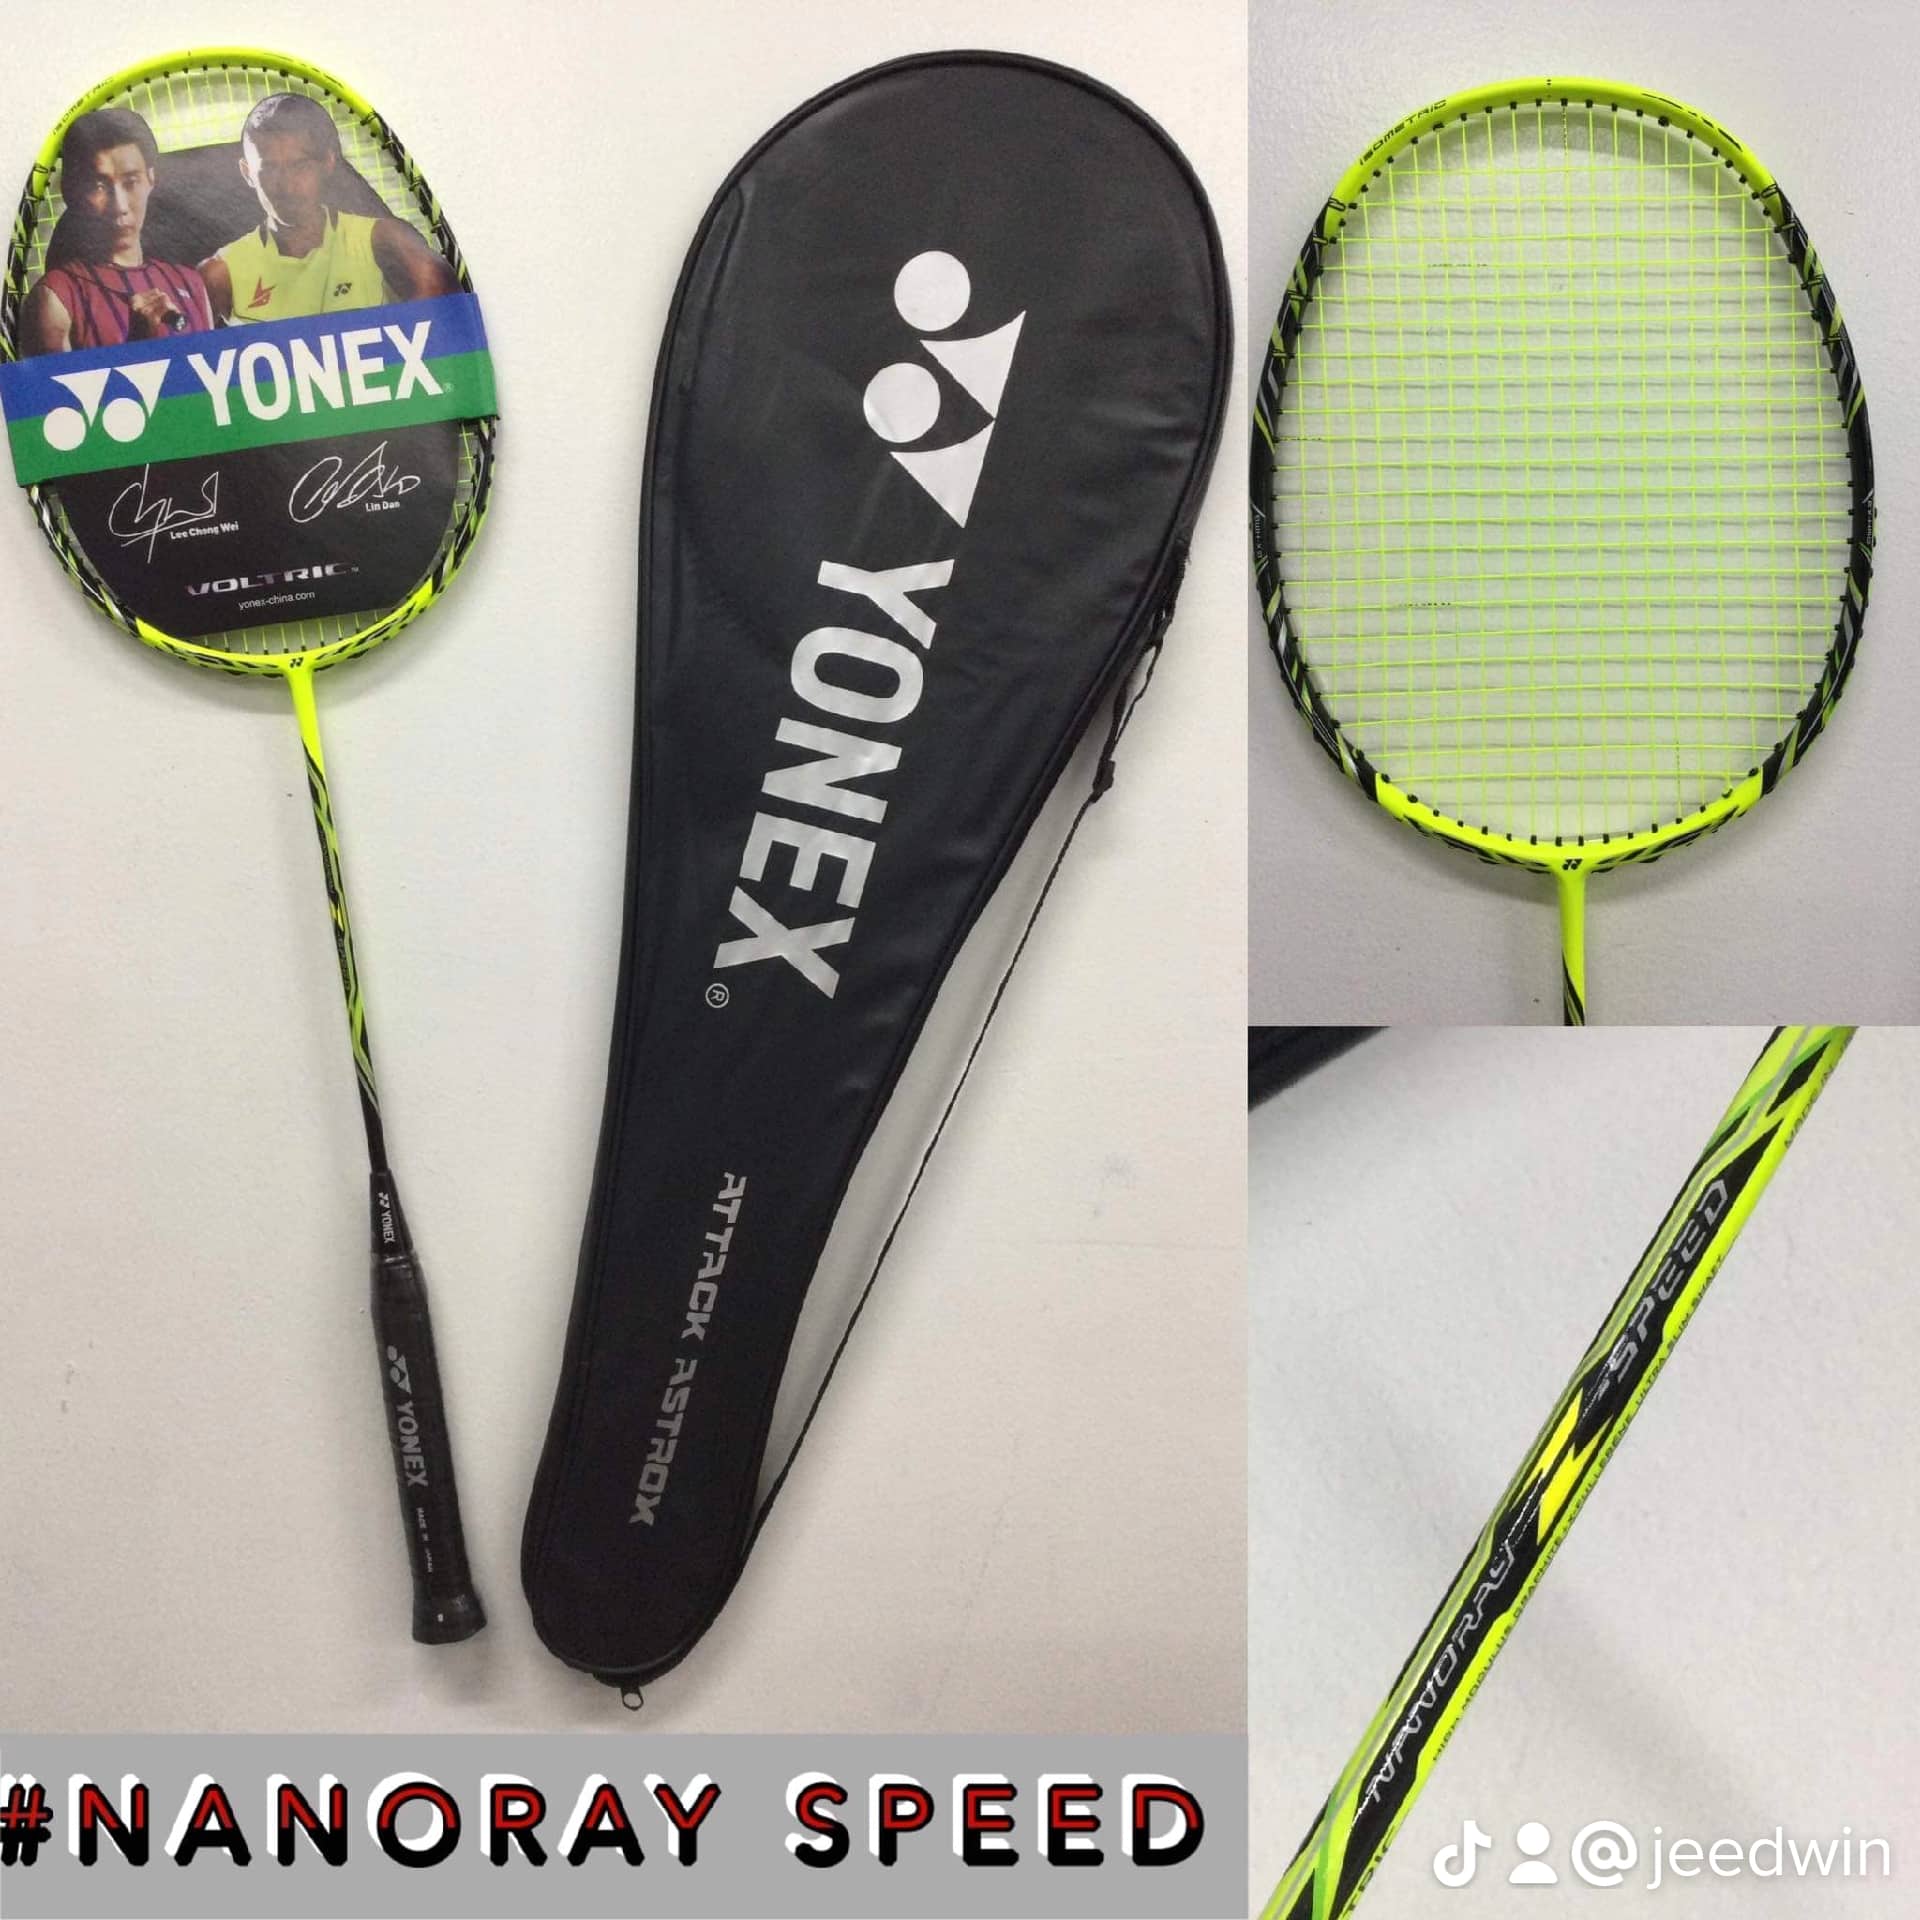 YONEX ナノレイZスピード 限定色 - その他スポーツ